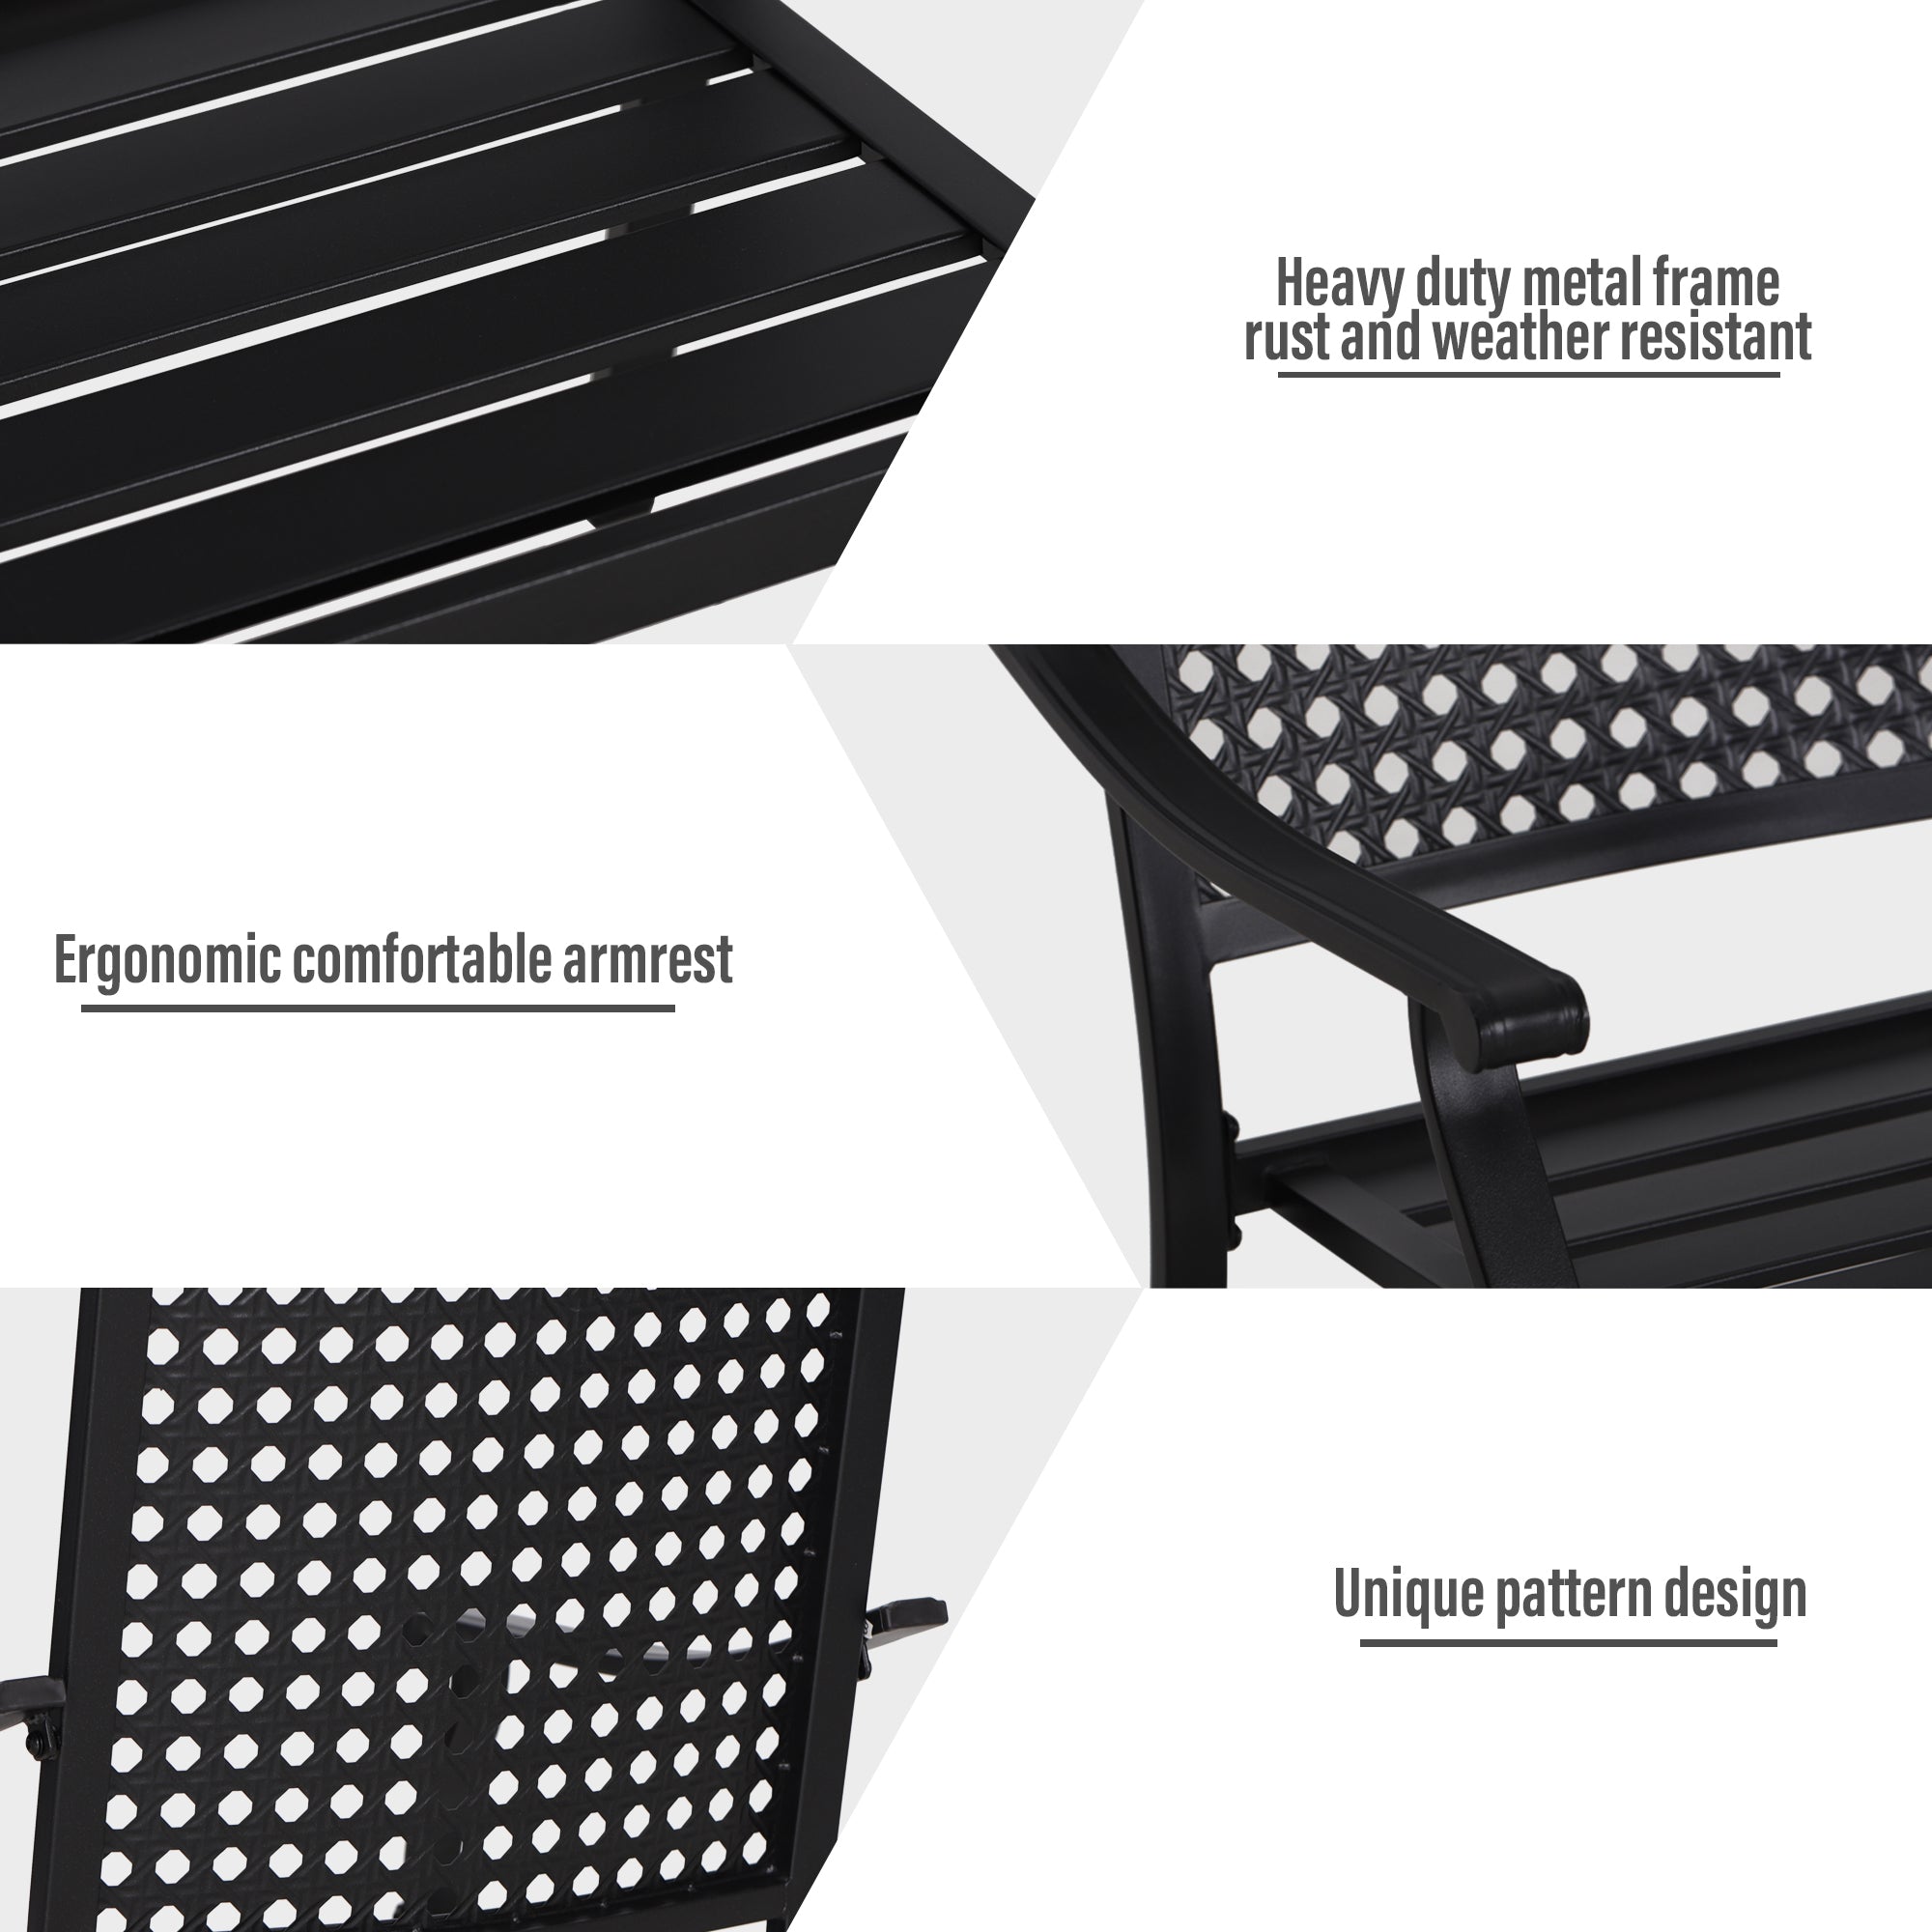 MFSTUDIO 2-Piece Patio Metal Dining Chairs for Garden Backyard